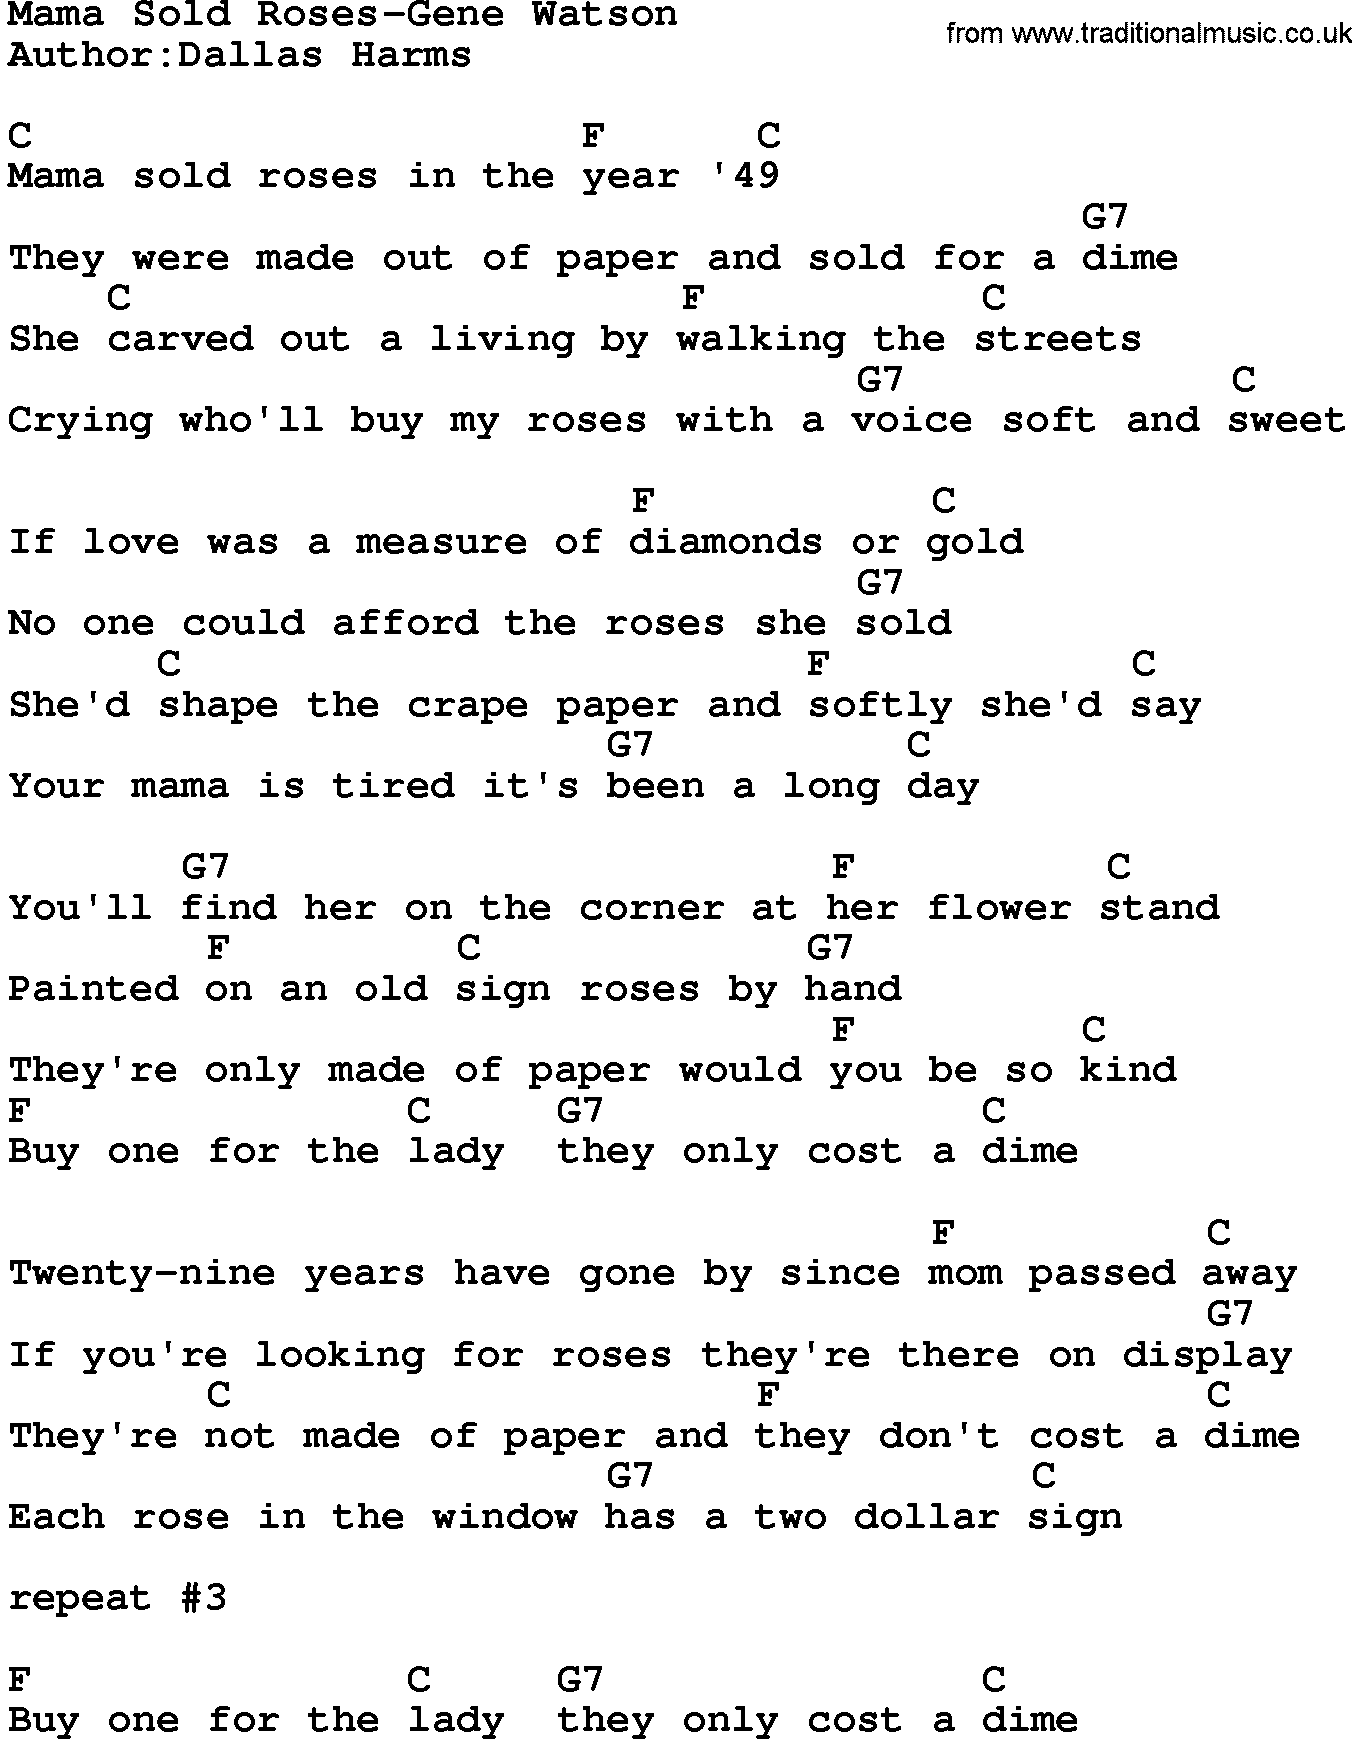 Country music song: Mama Sold Roses-Gene Watson lyrics and chords